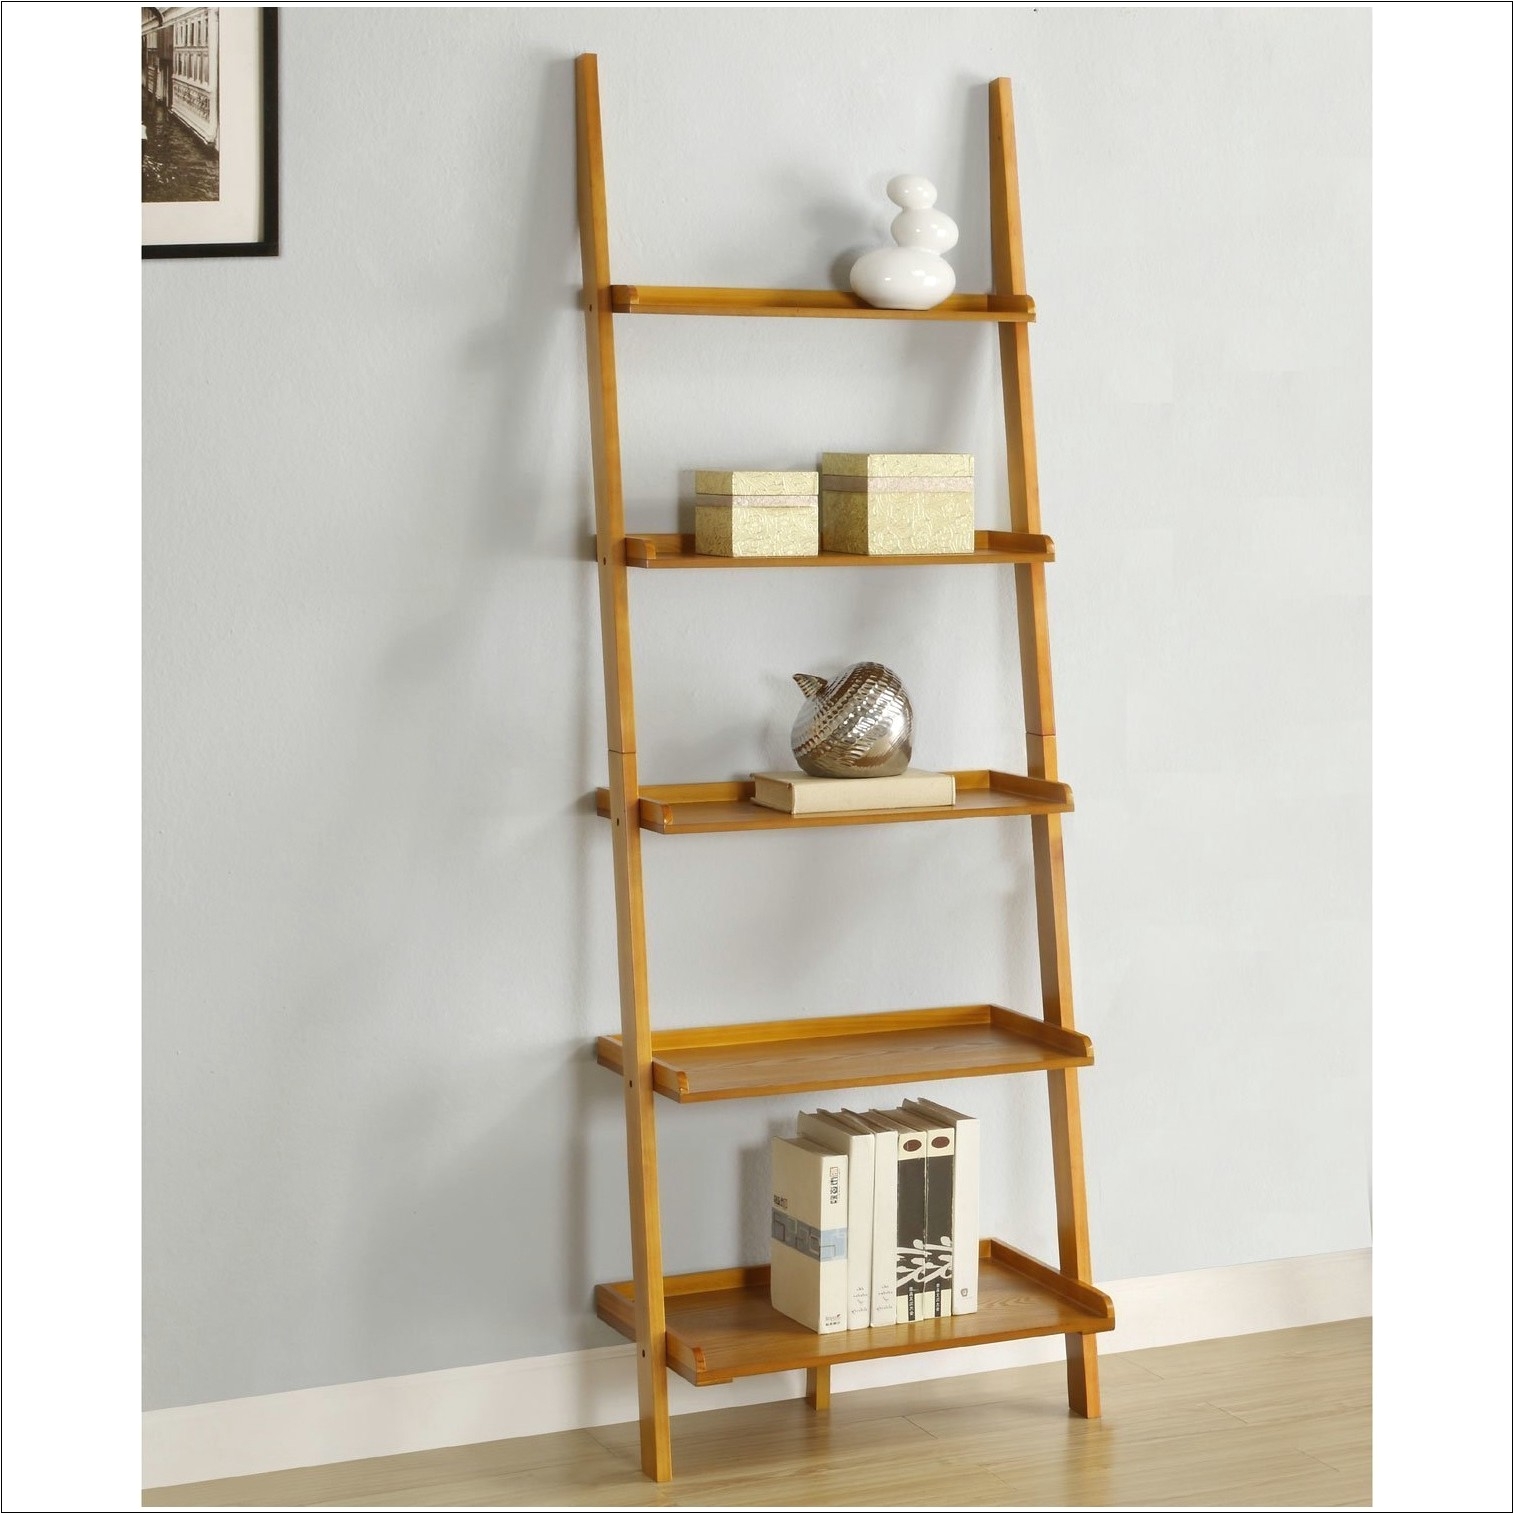 bookcases storages shelves ladder bookshelf at target easy ladder bookshelf target to